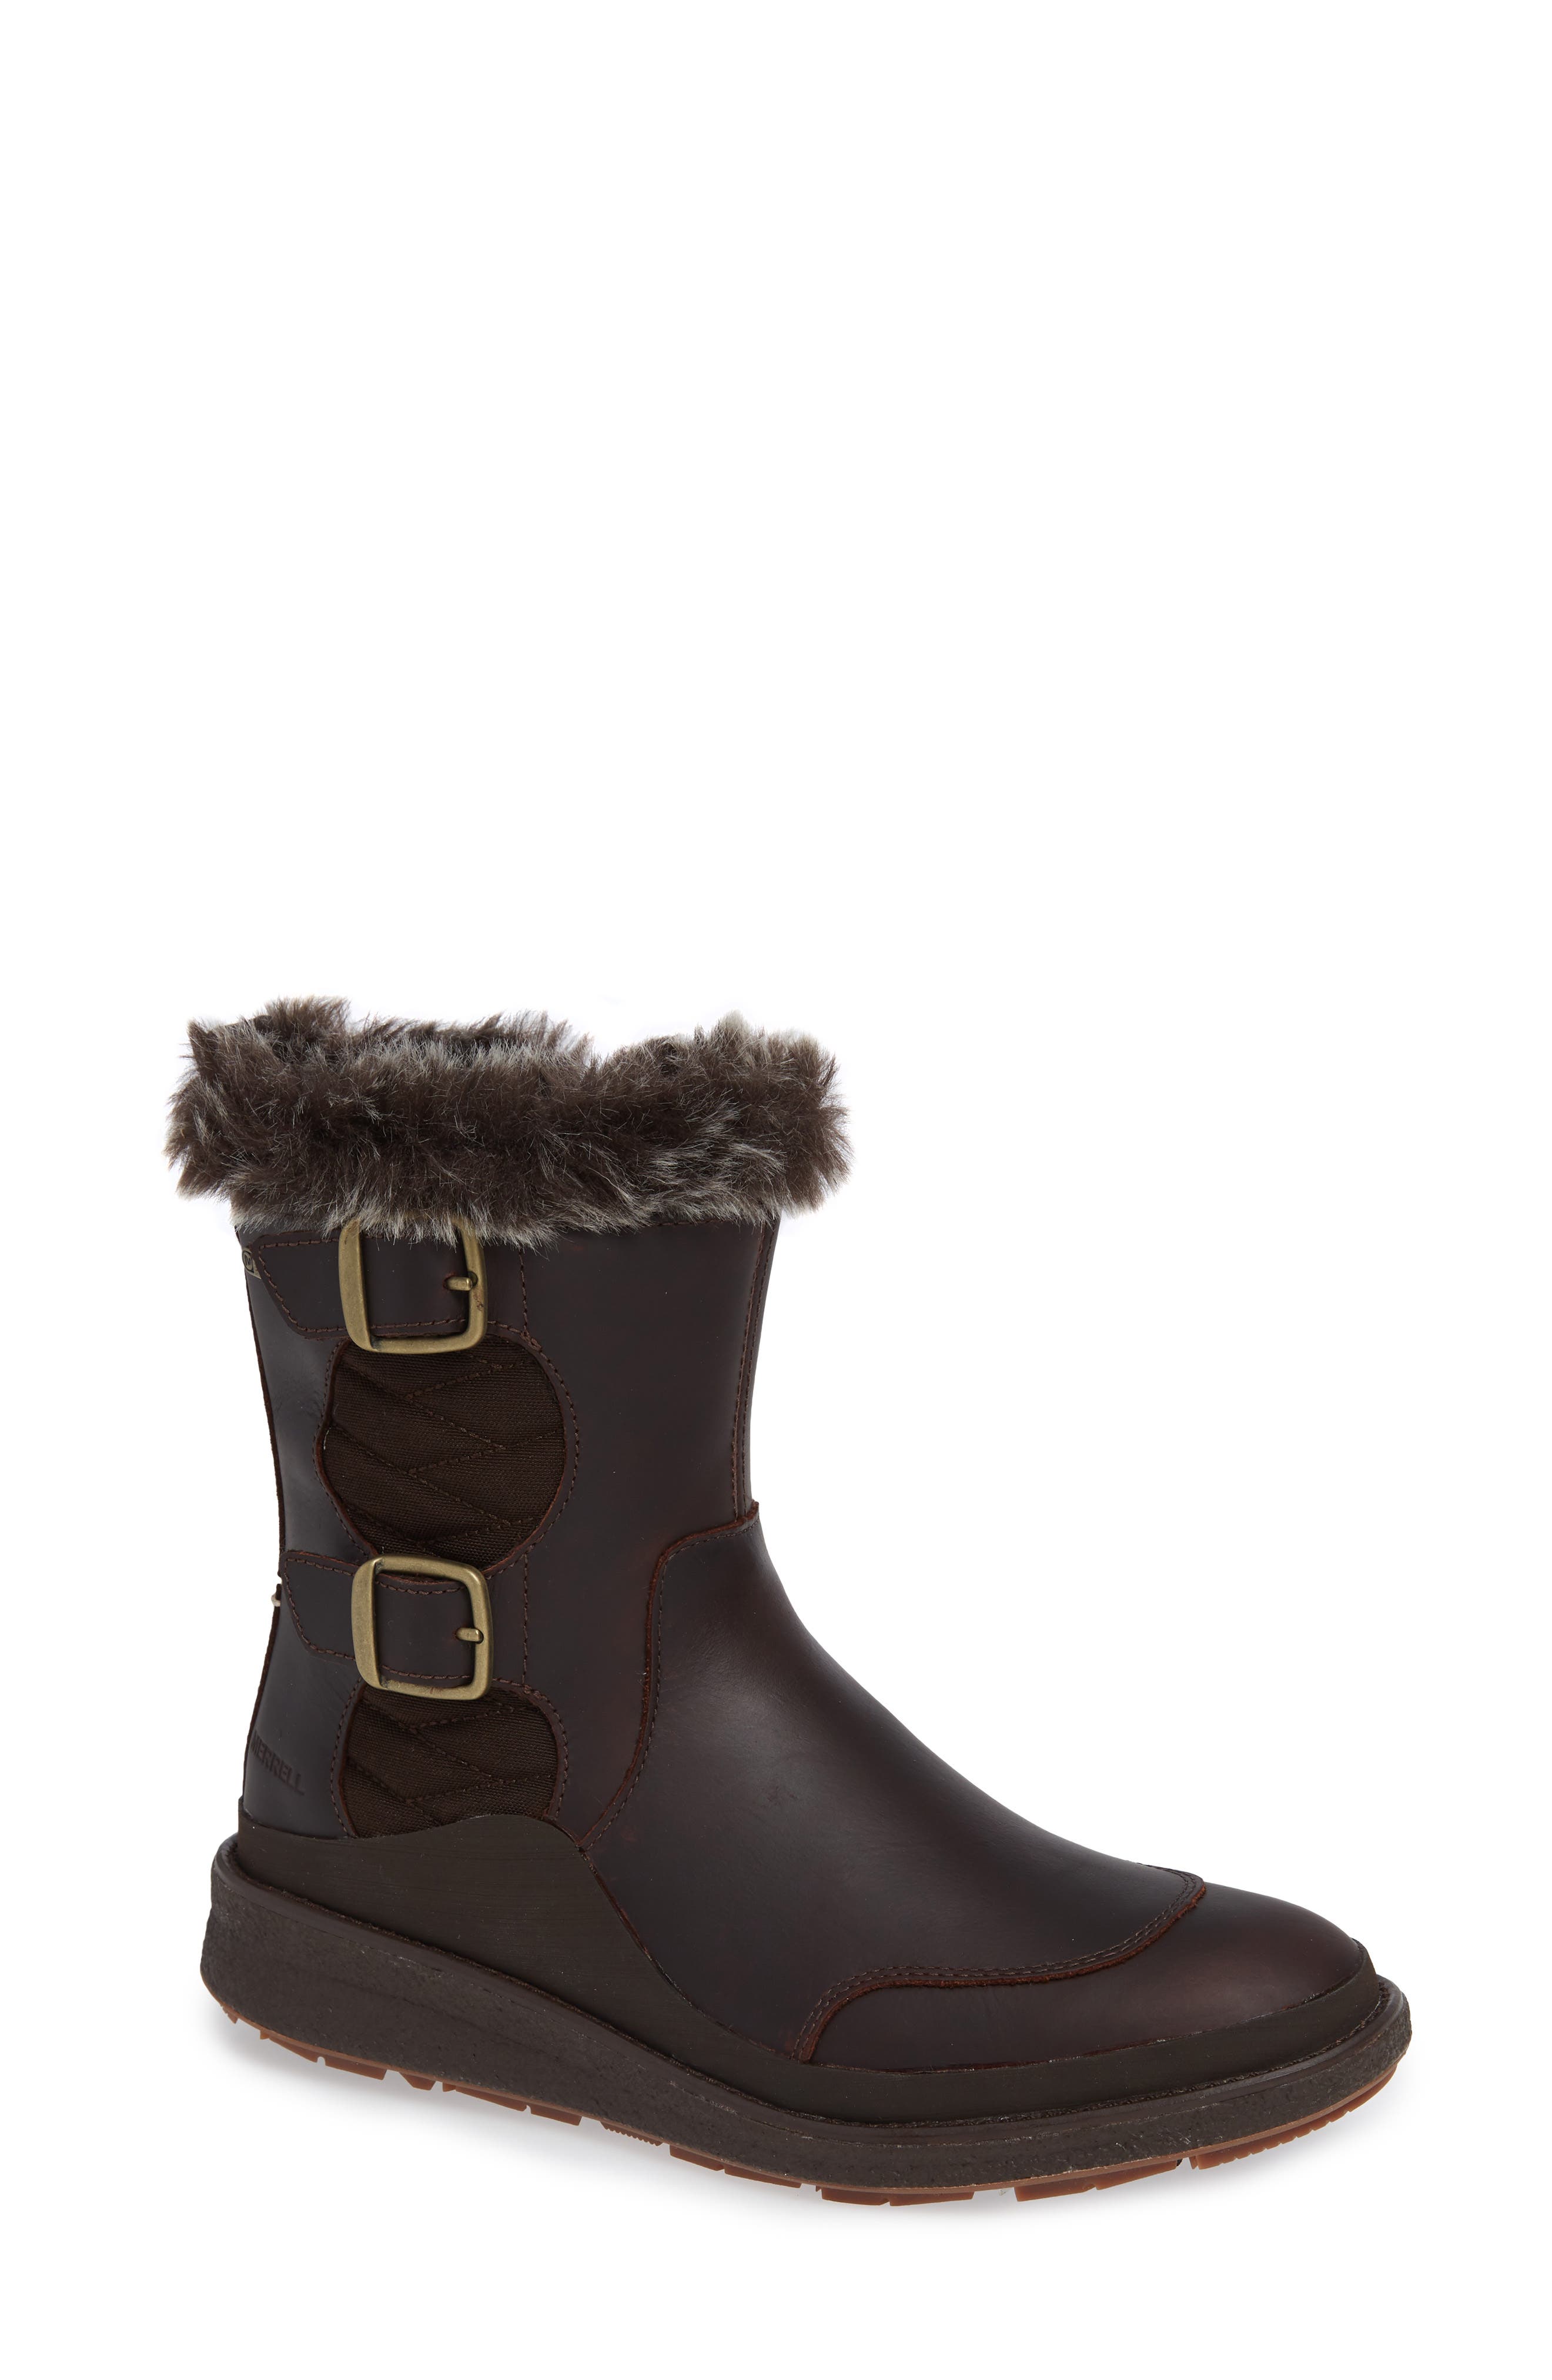 Women's Merrell Winter \u0026 Snow Boots 